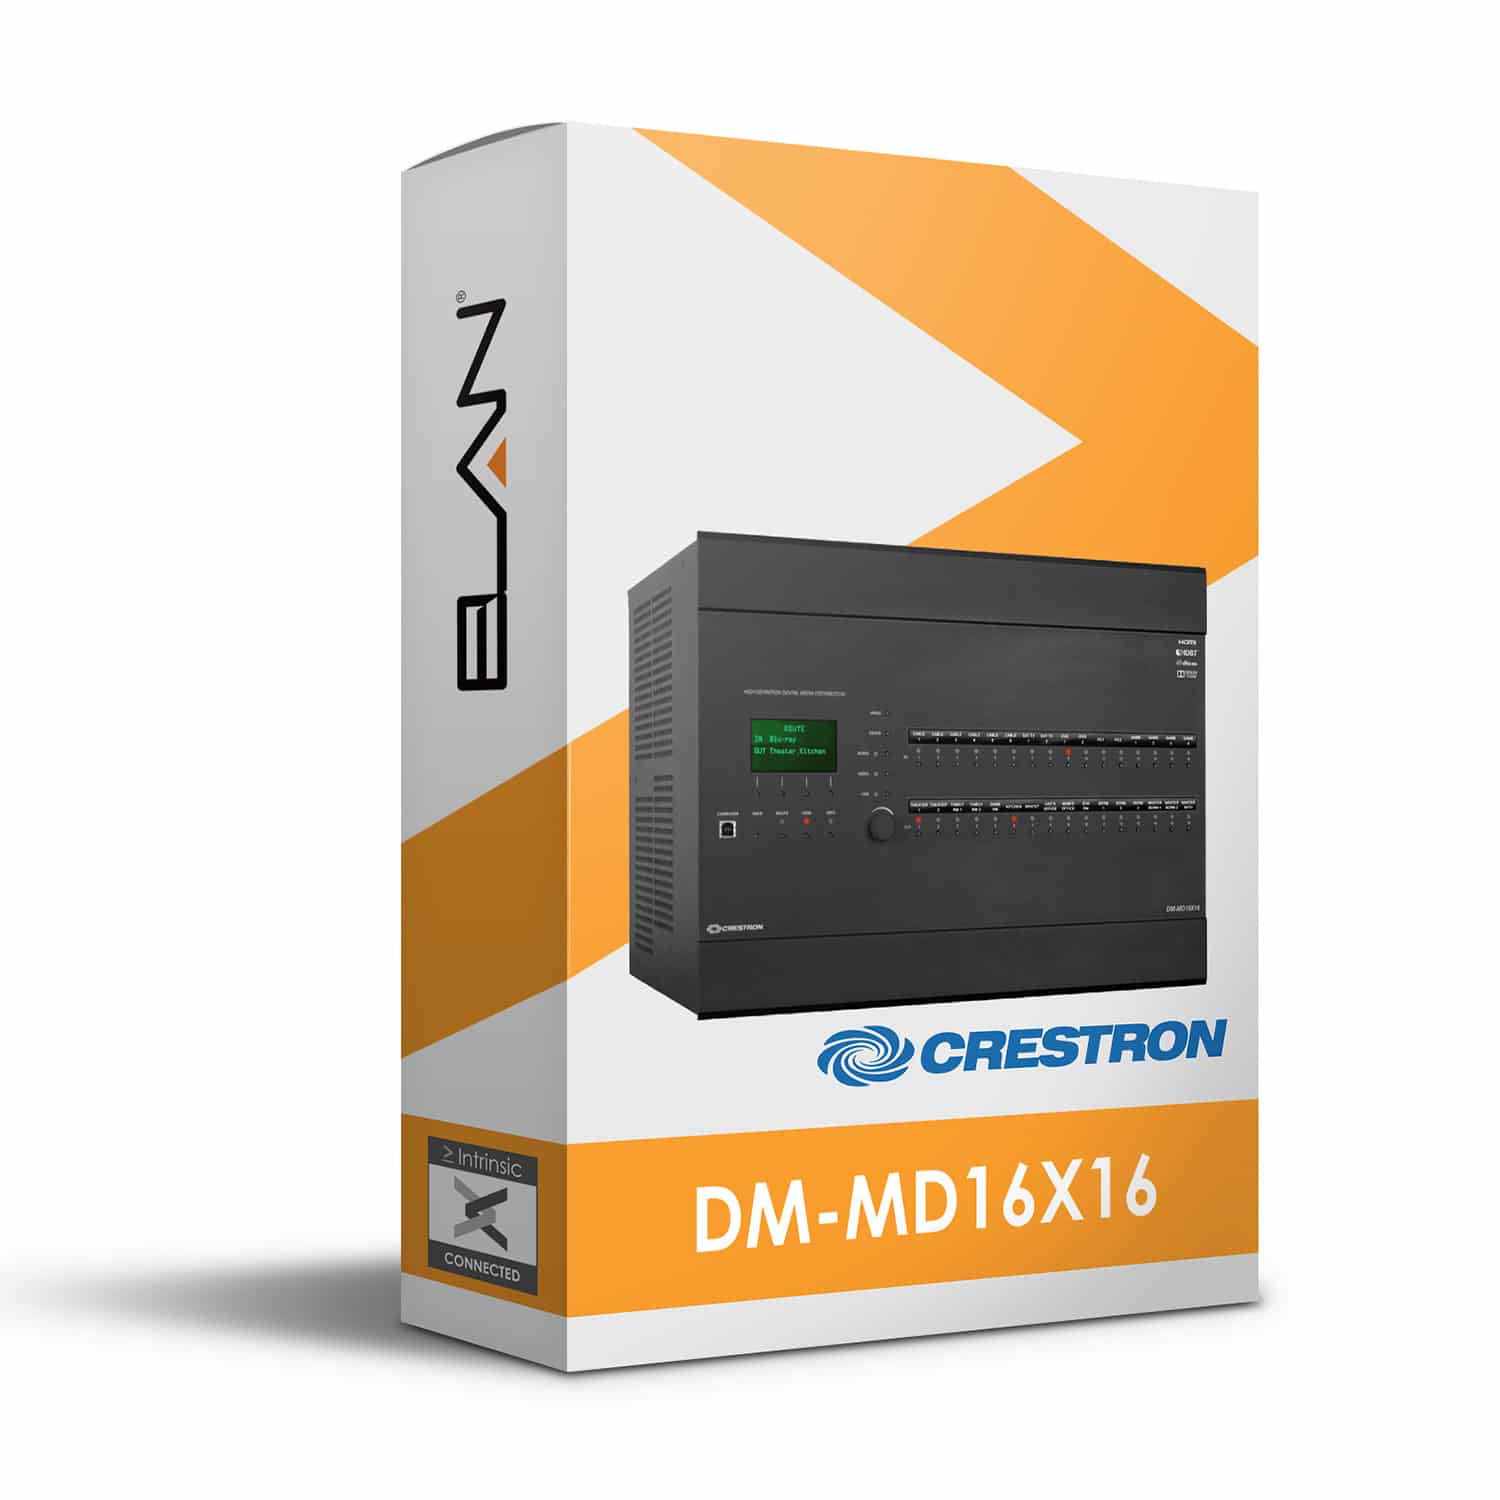 Crestron DM-MD16x16 Matrix Driver for ELAN